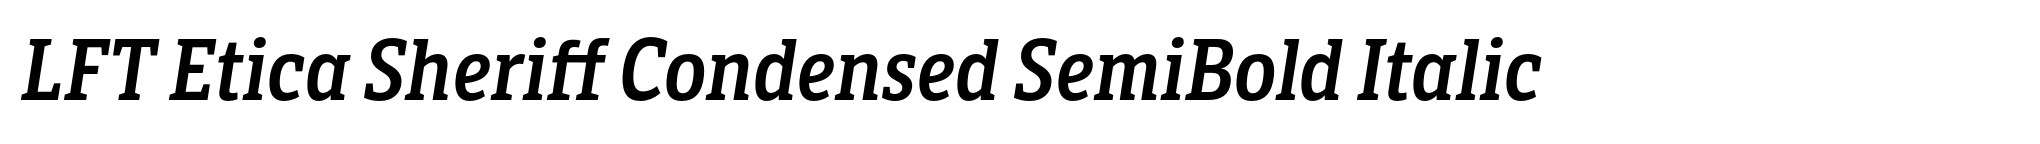 LFT Etica Sheriff Condensed SemiBold Italic image